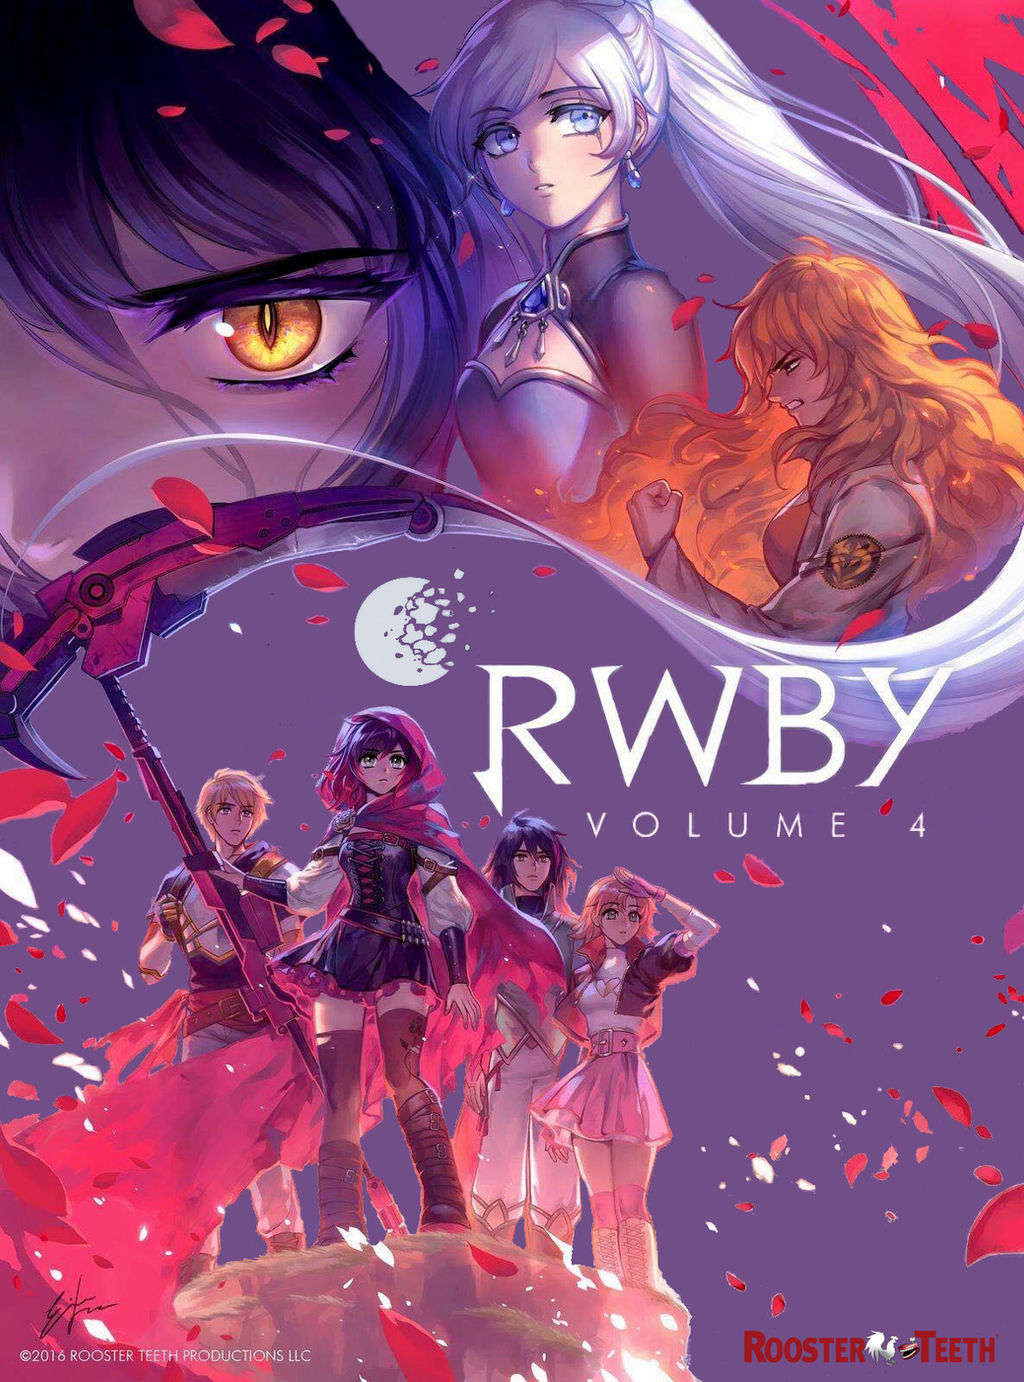 RWBY Volume 4 - Official Poster (Fan Edit) by RaidenRaider on DeviantArt